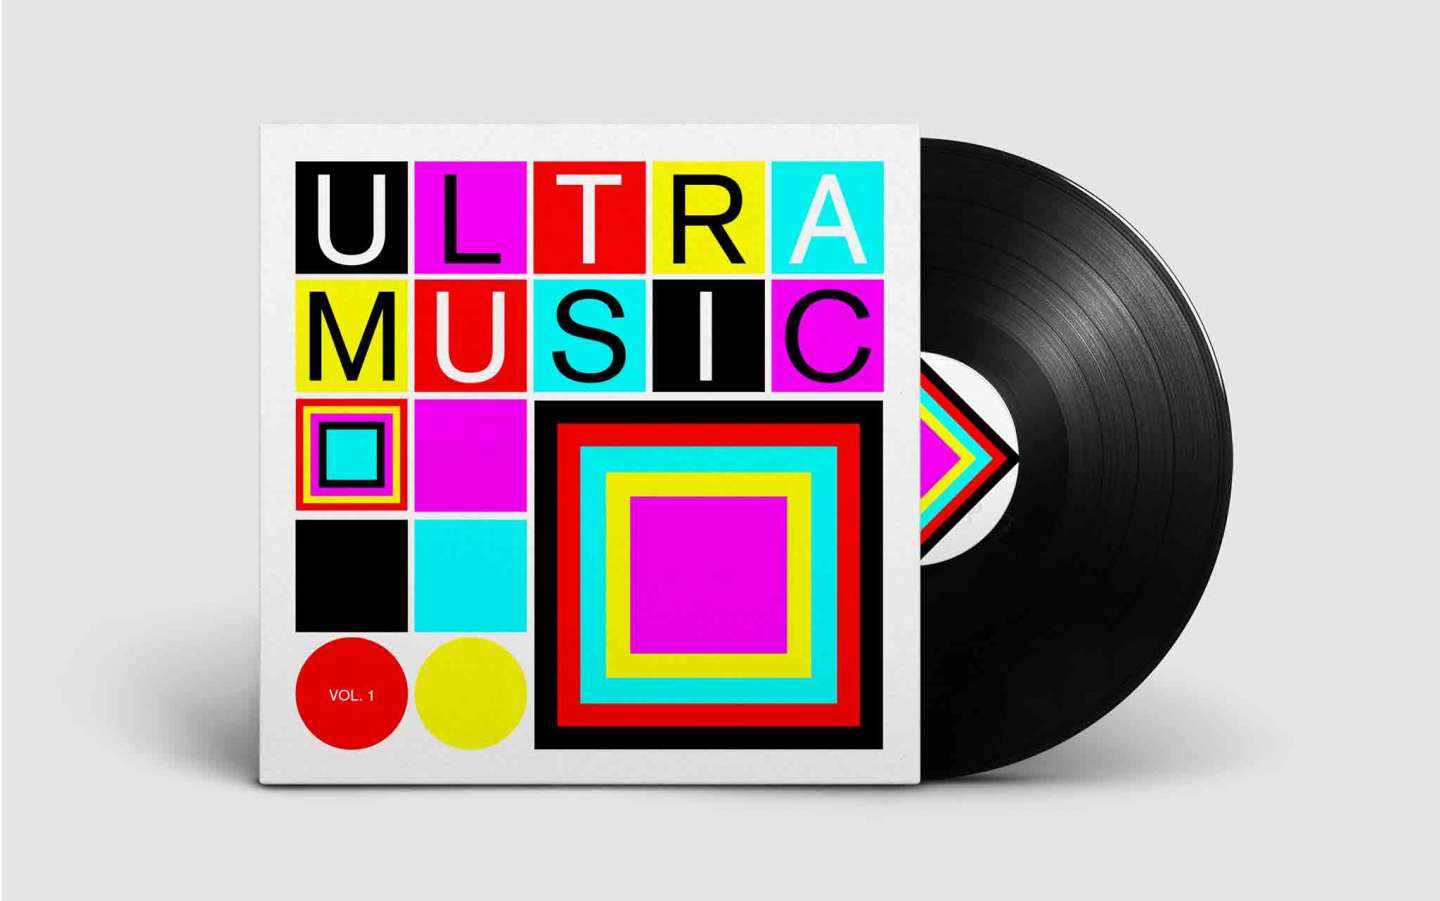 ULTRA MUSIC